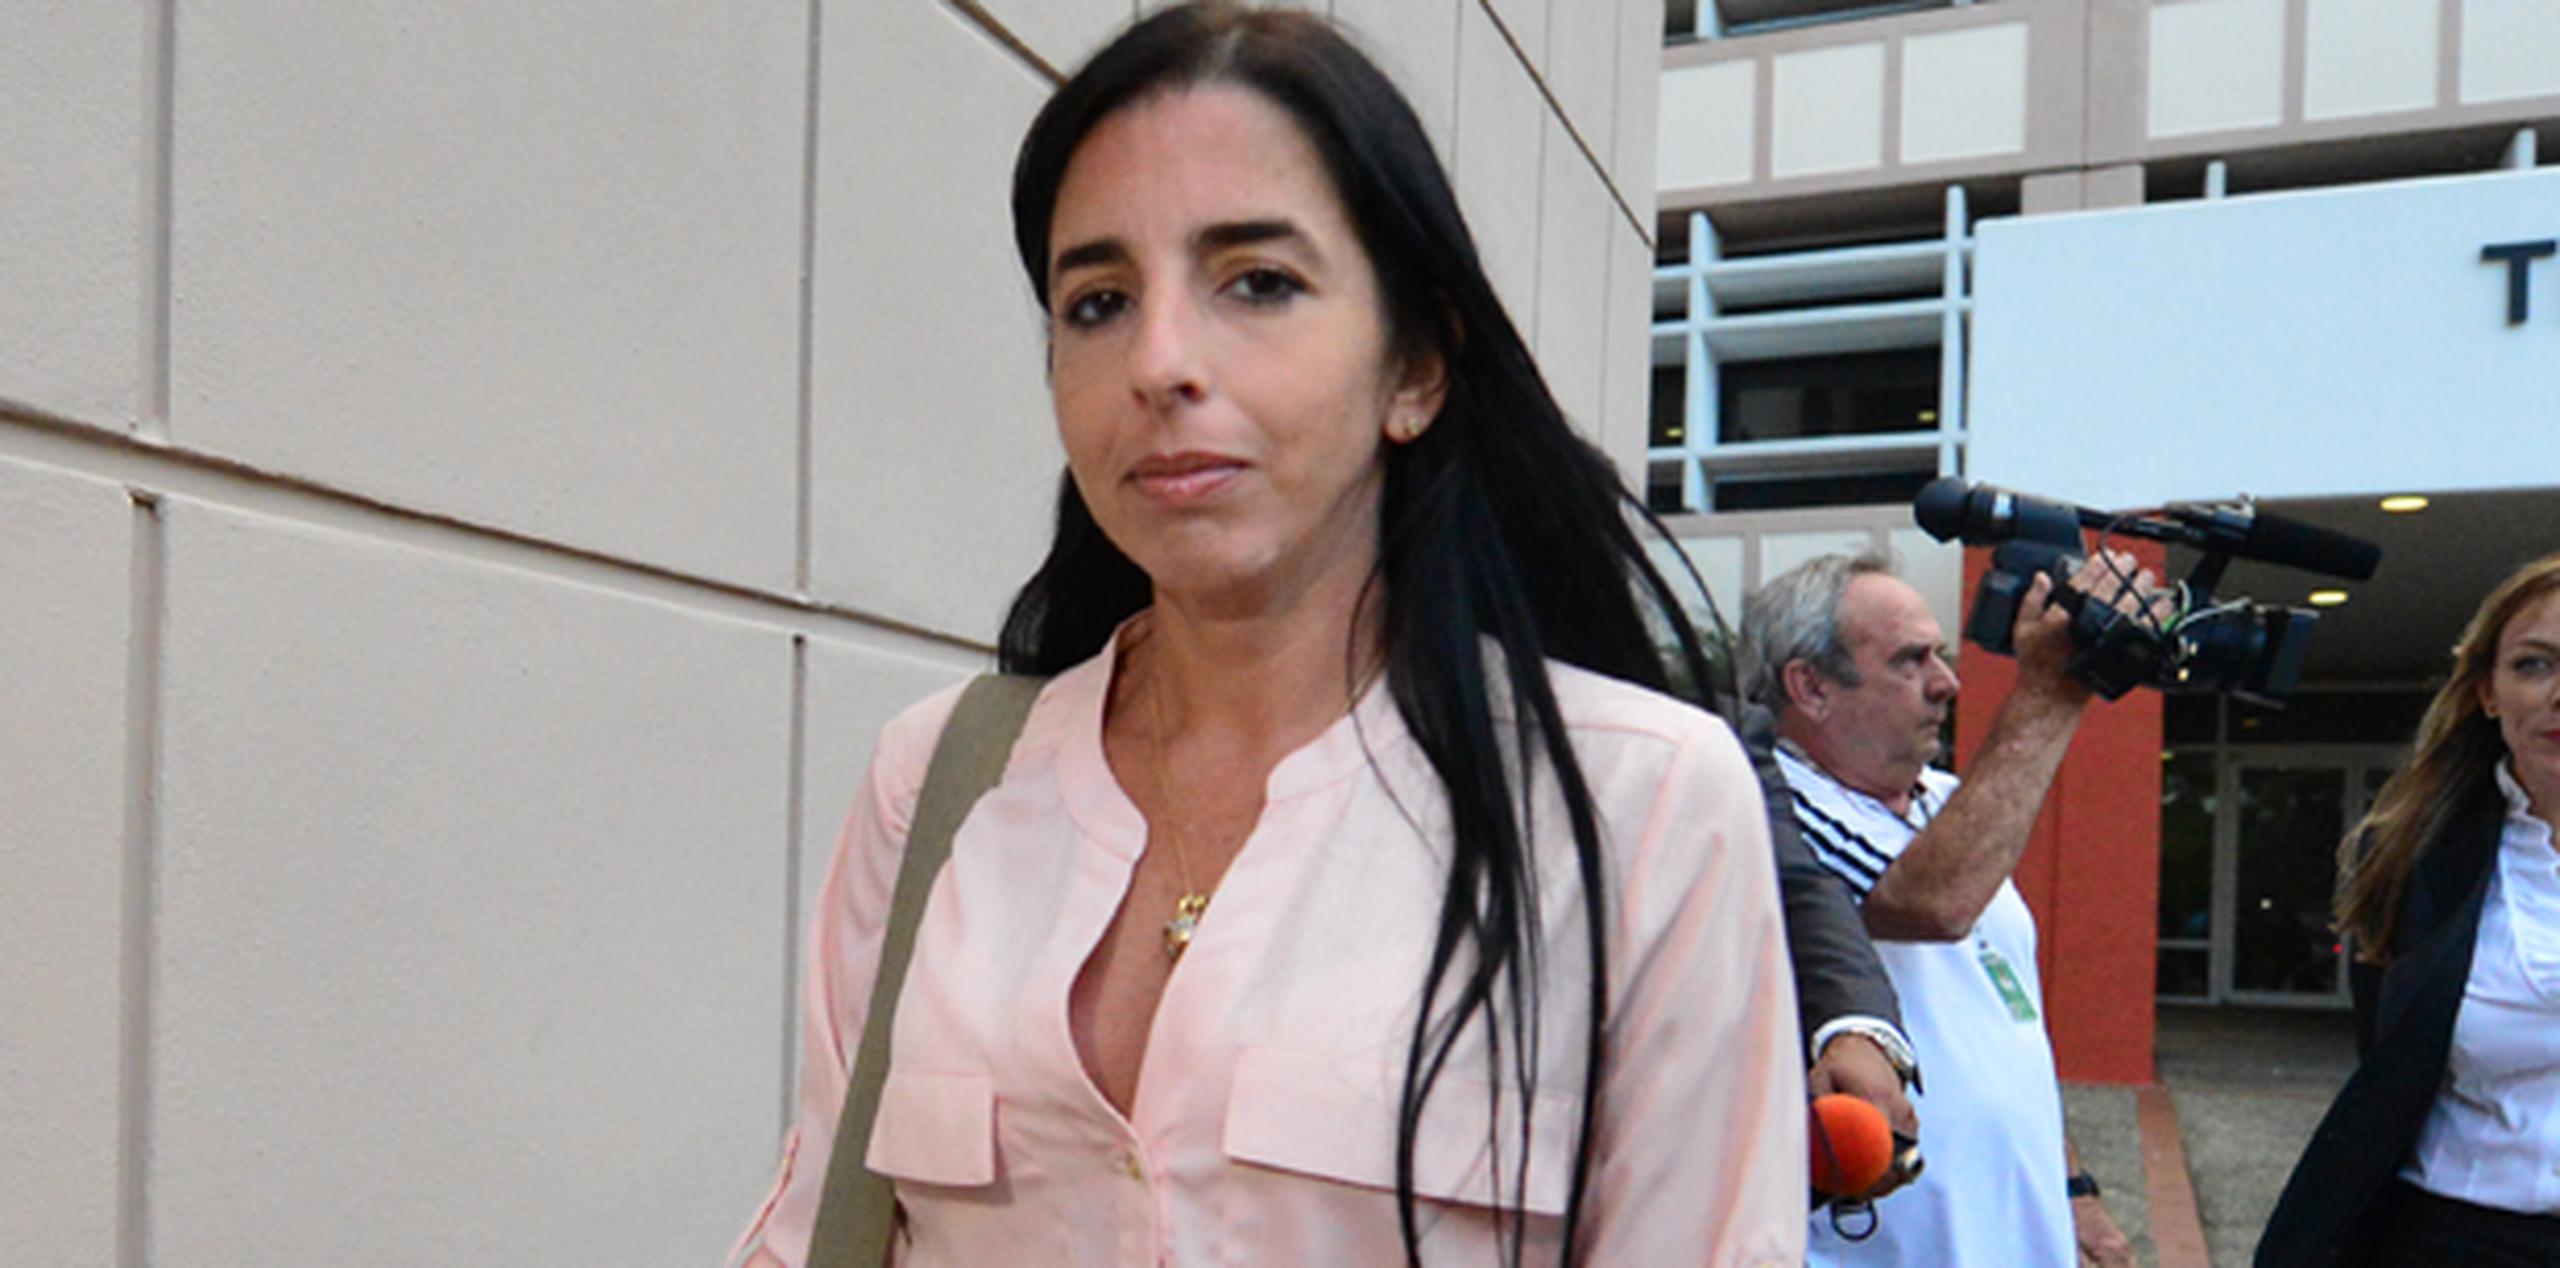 Ana Cacho se mostraba seria pero tranquila al salir del tribunal. (luis.alcaladelolmo@gfrmedia.com)